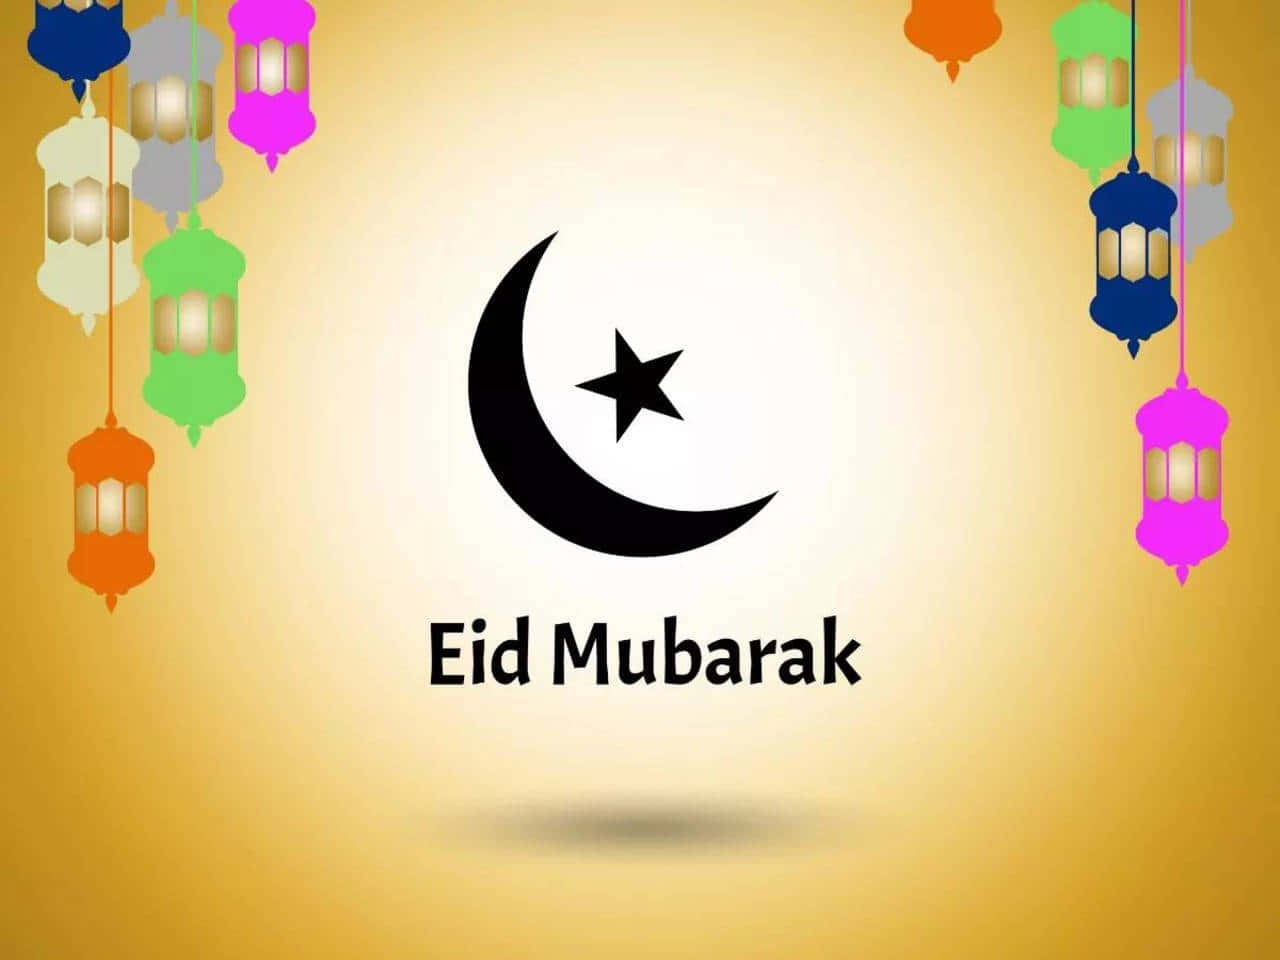 "Celebrate Eid Mubarak and spread the joy!"